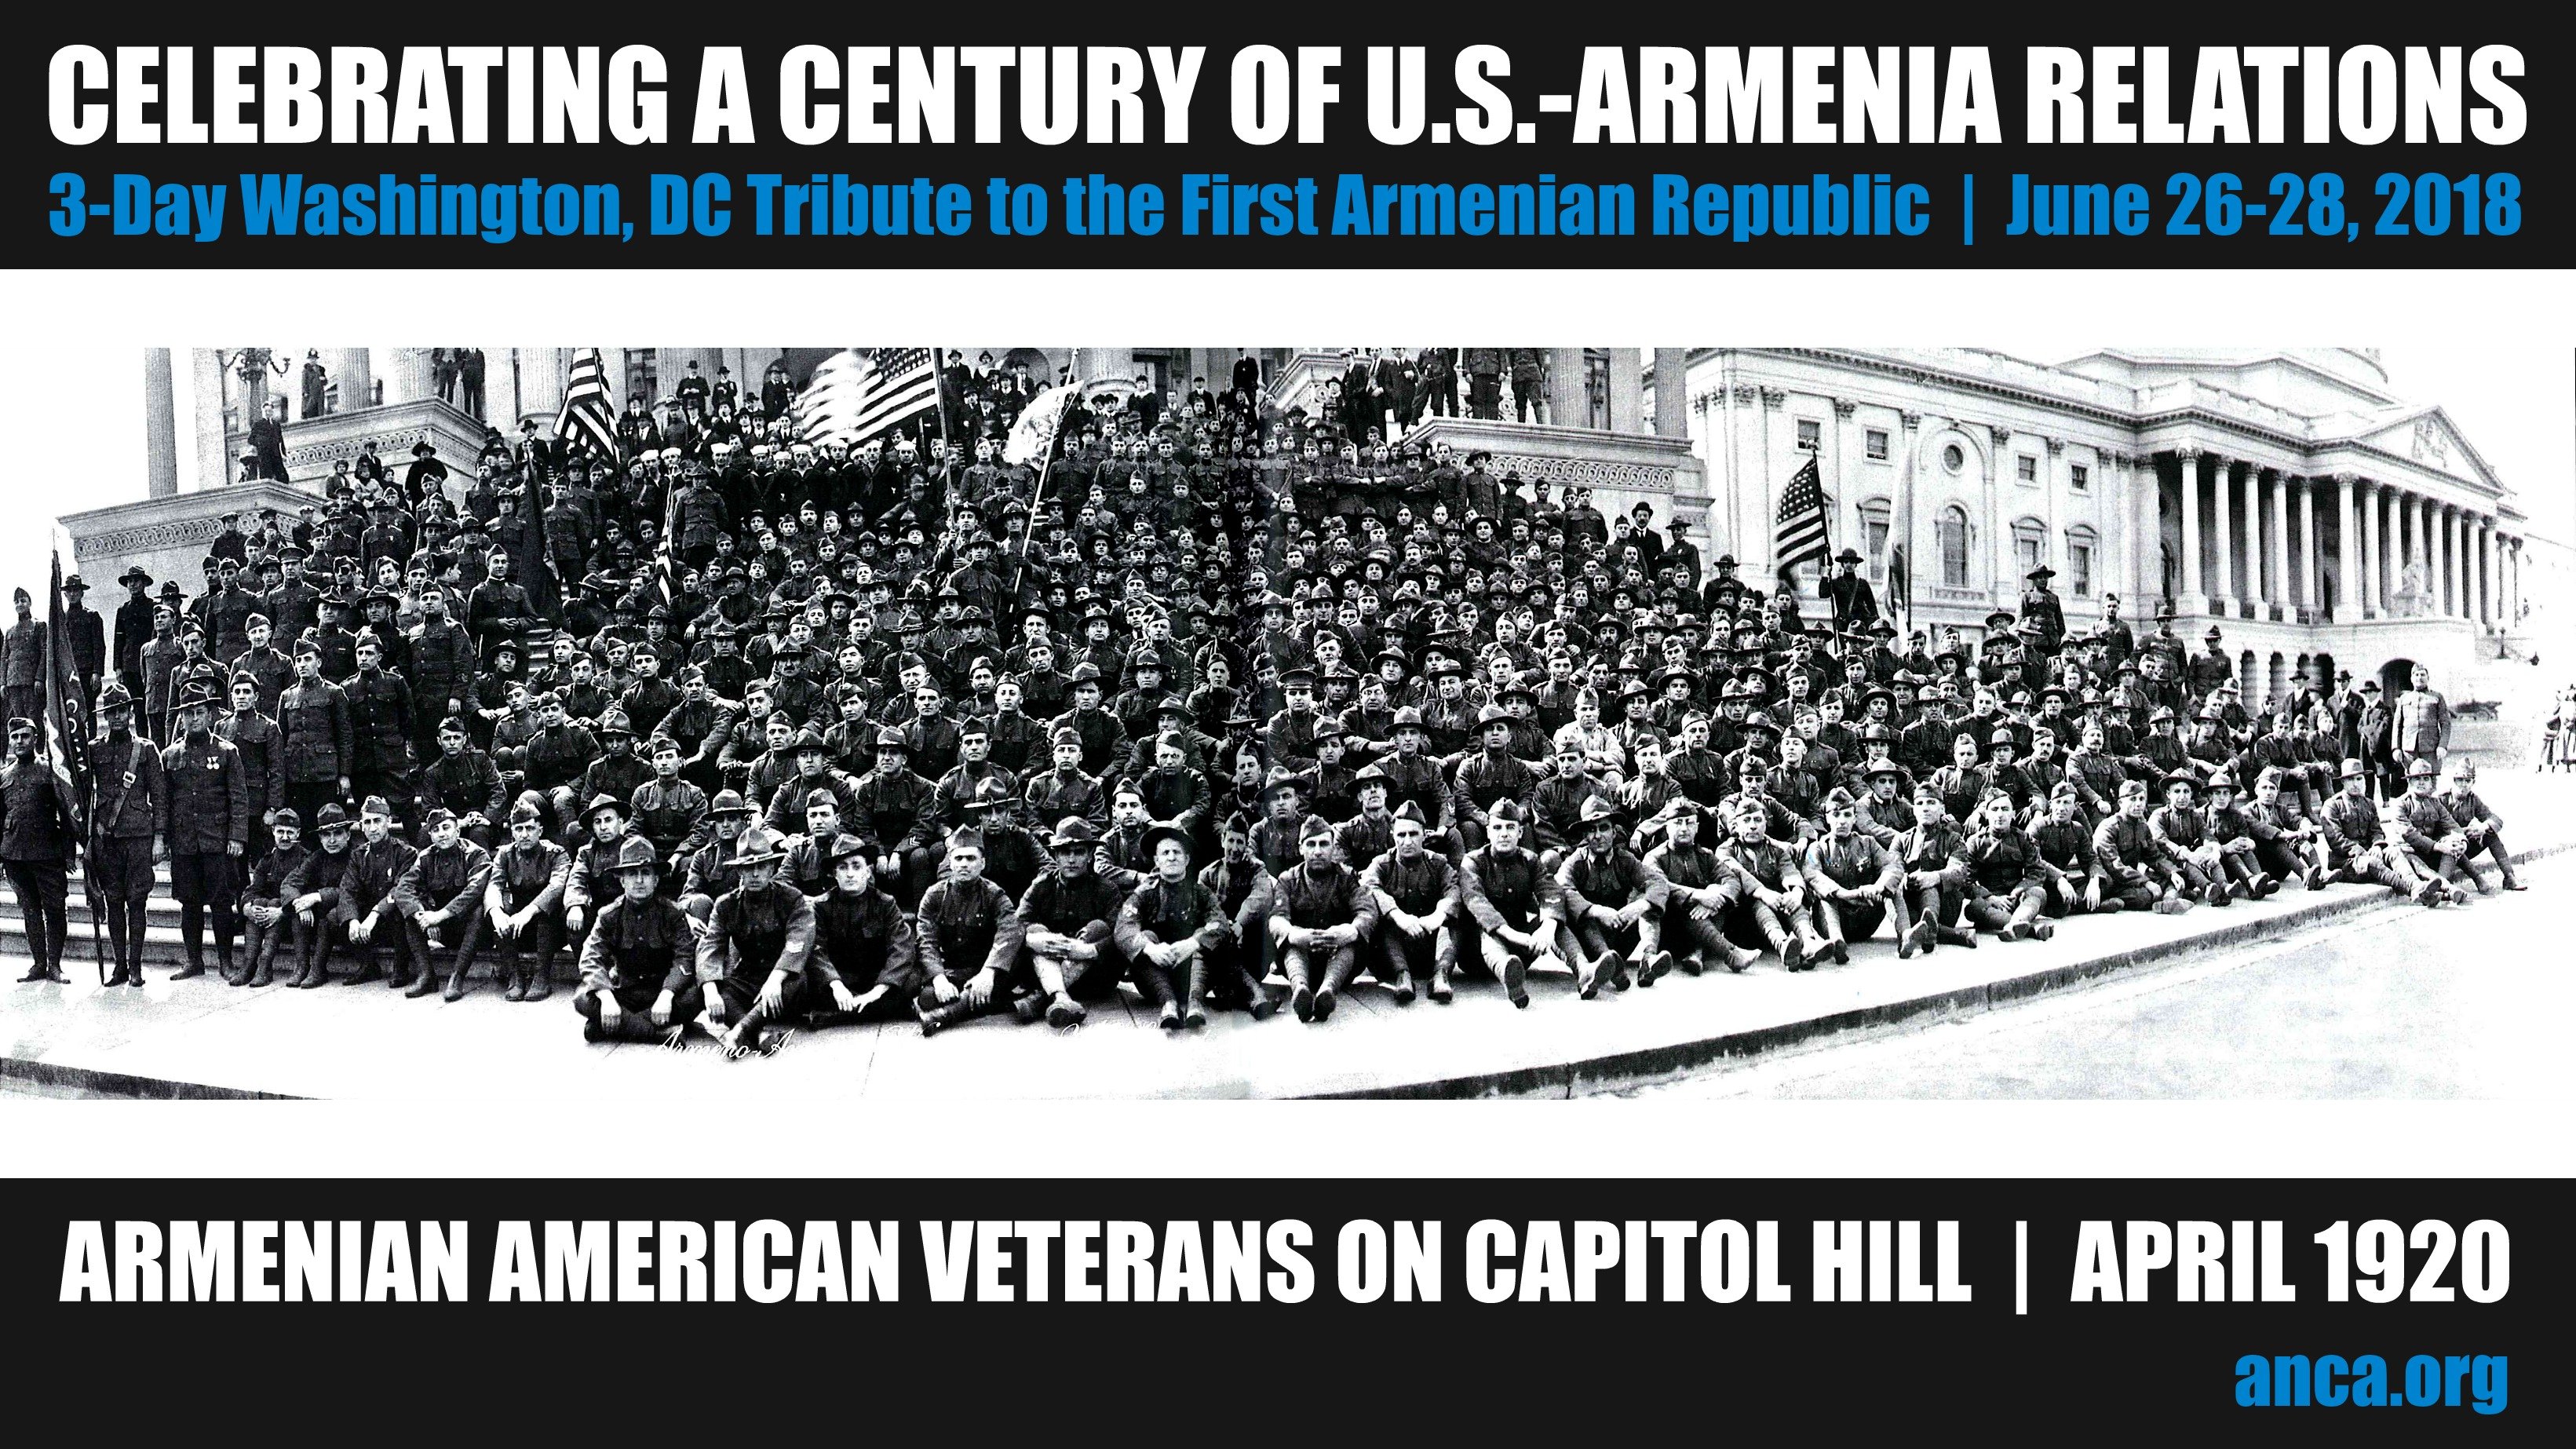 ANCA June 27th advocacy day part of three-day celebration of a century of U.S.-Armenia friendship in Washington, DC